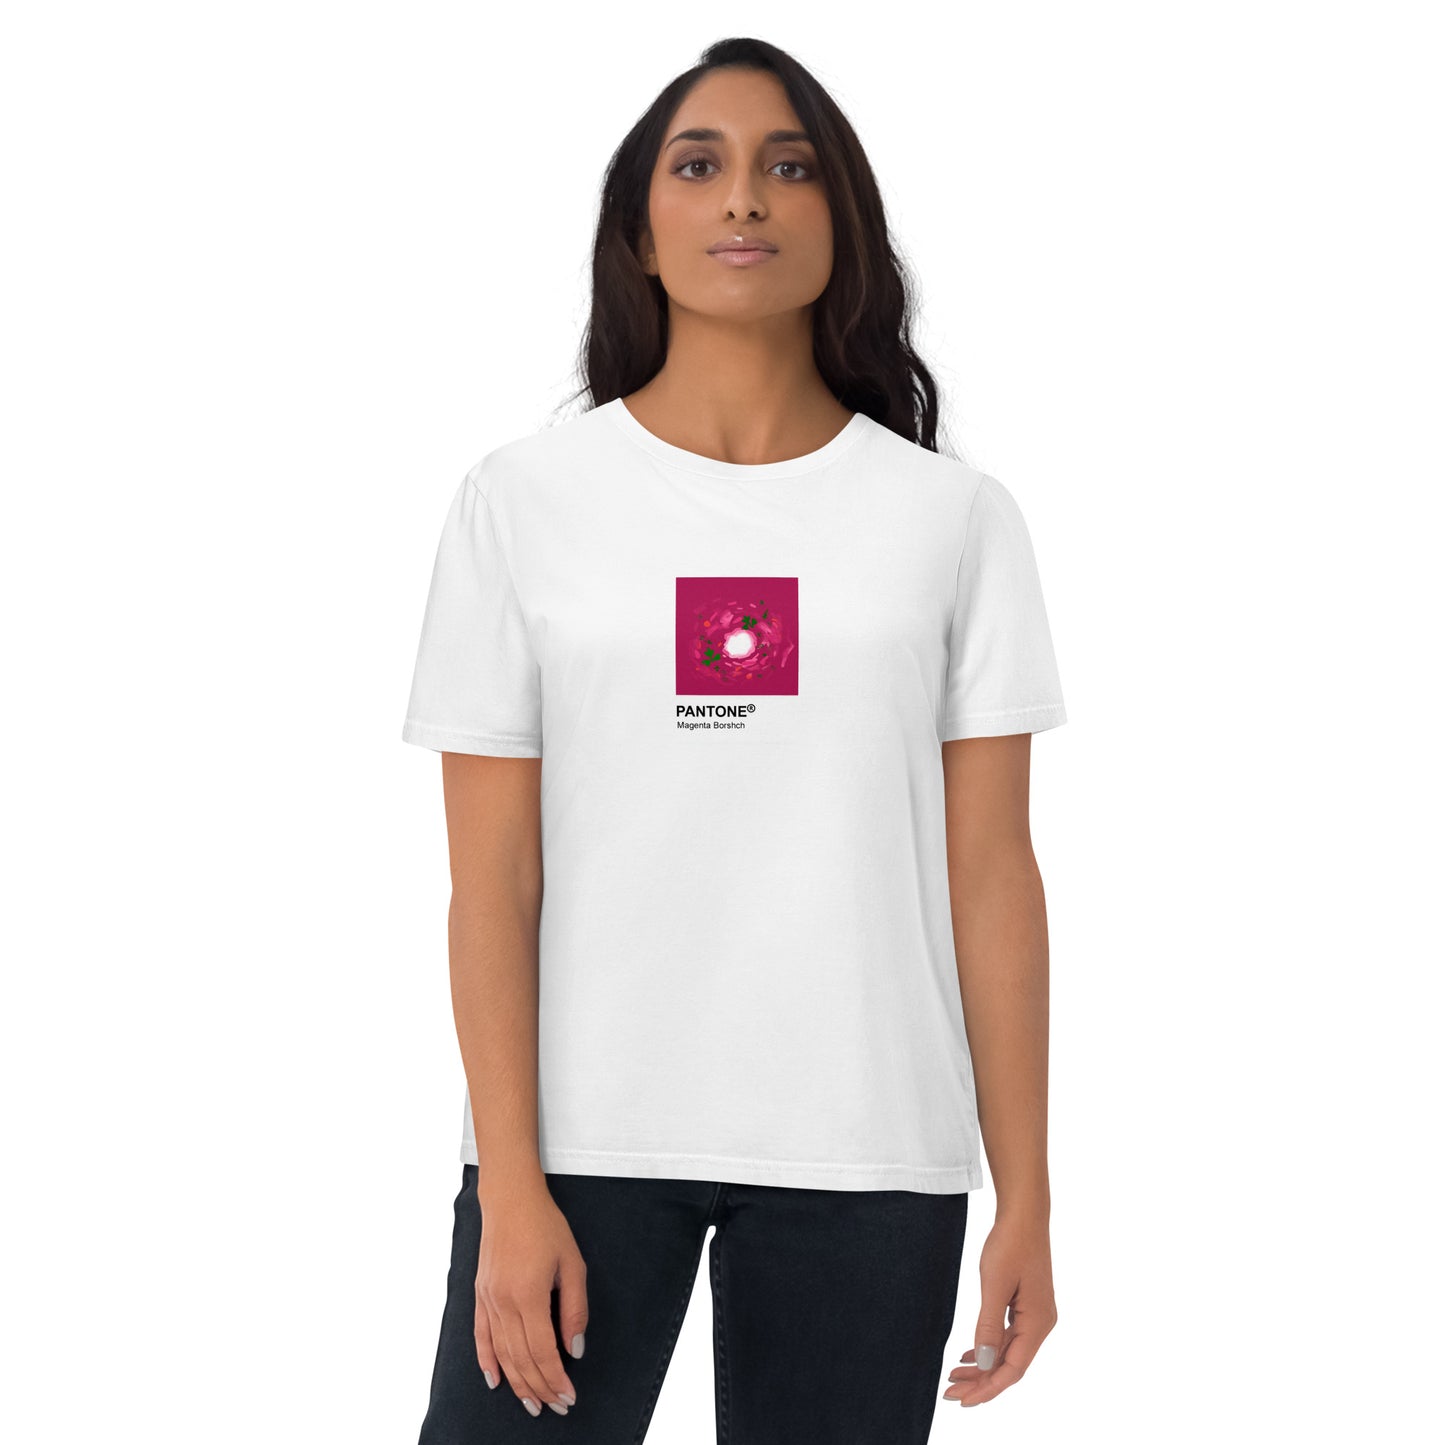 Borshch printed unisex organic cotton t-shirt in white